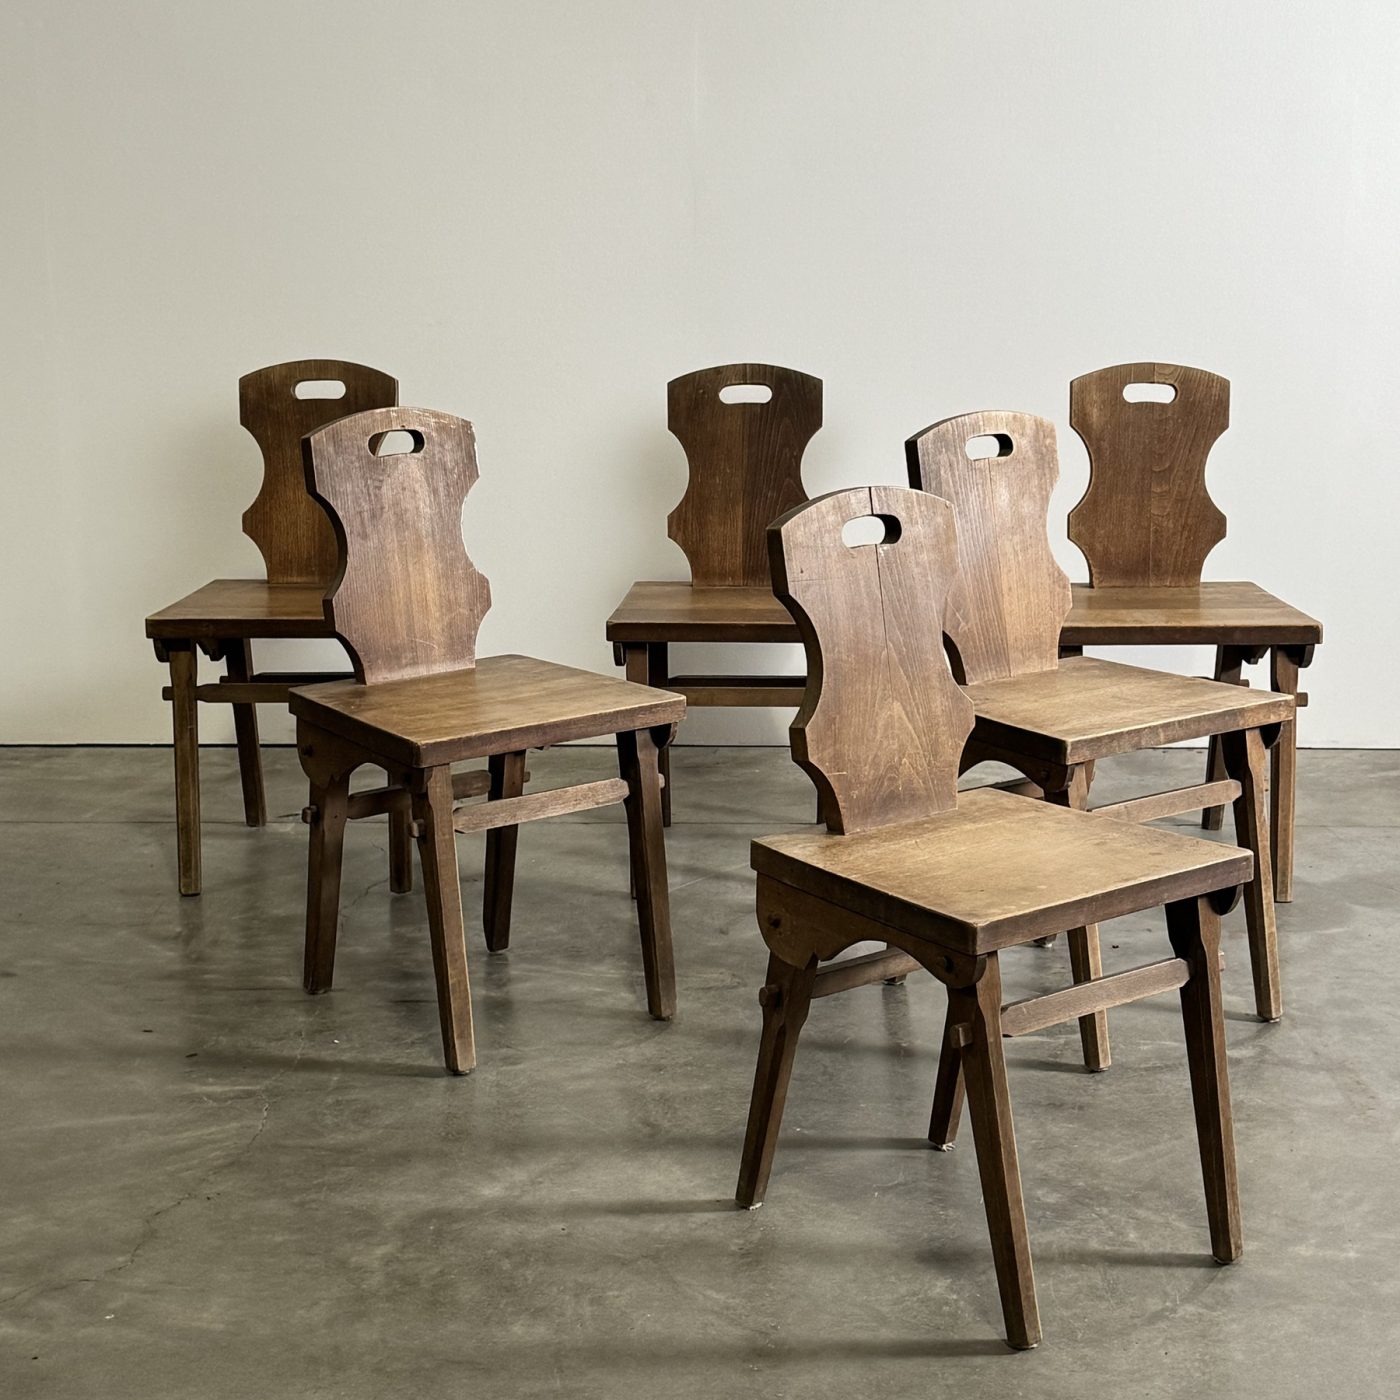 objet-vagabond-rustic-chairs0011